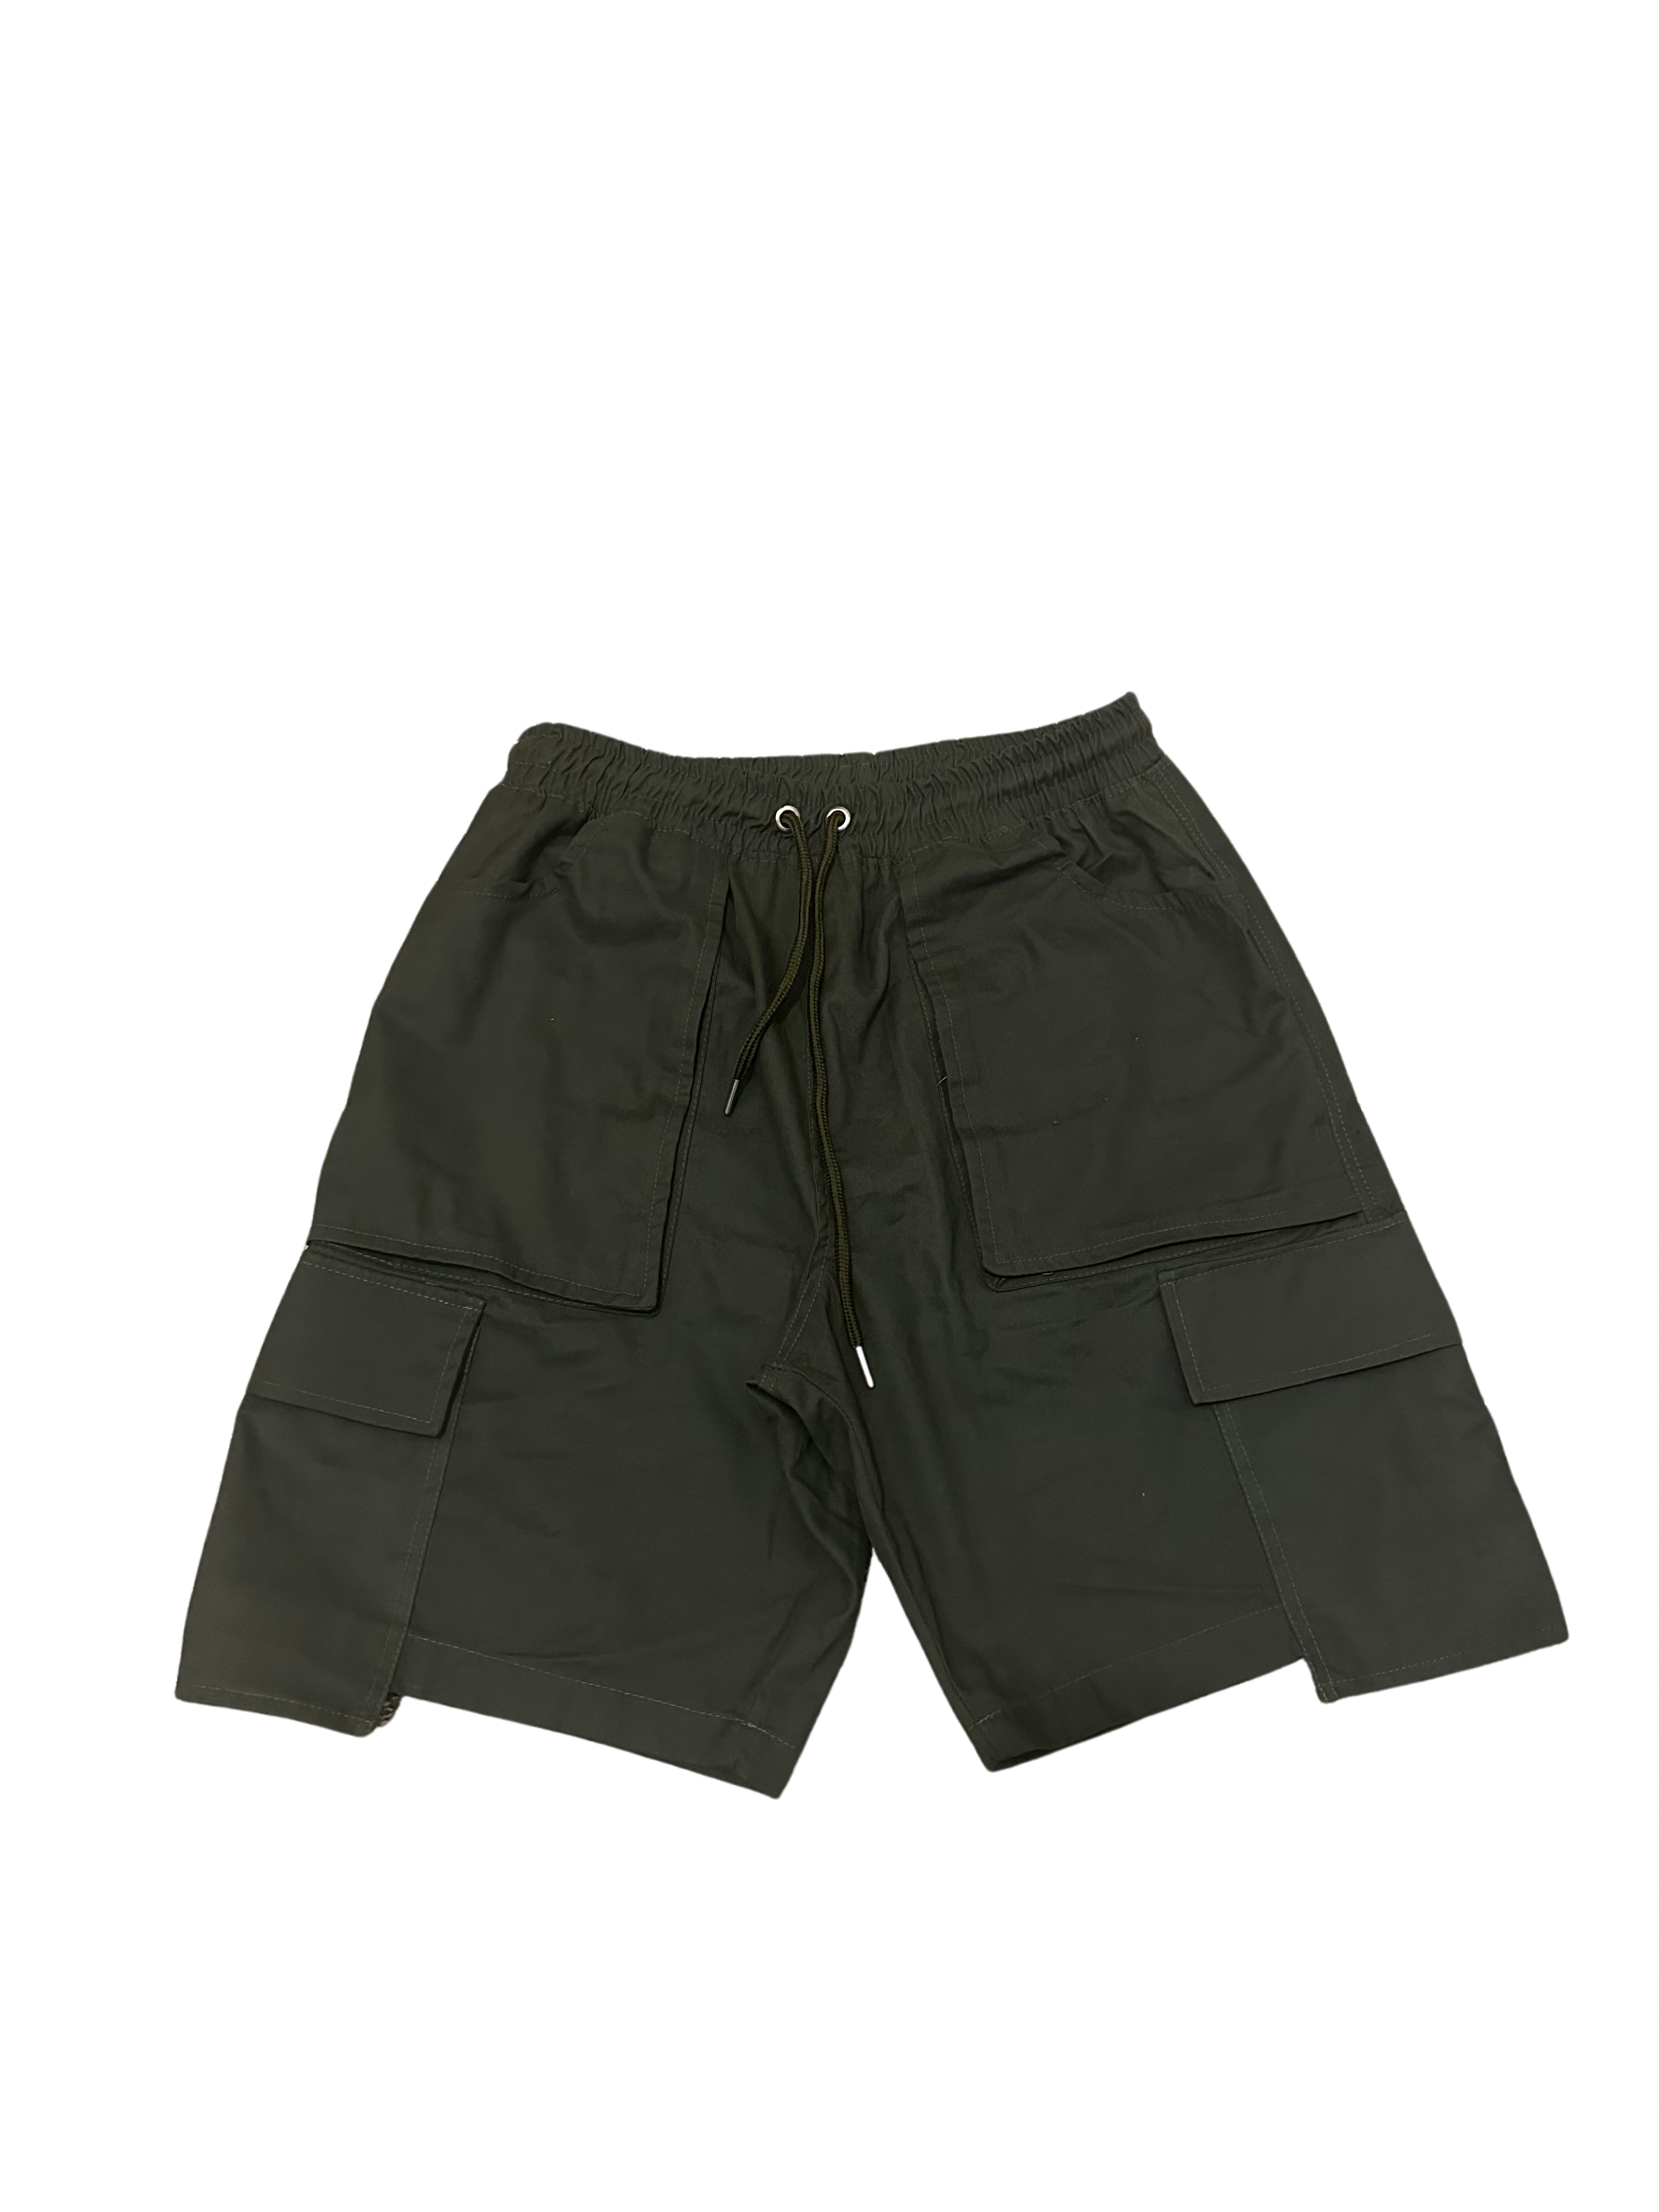 .Olive Pocket Shorts